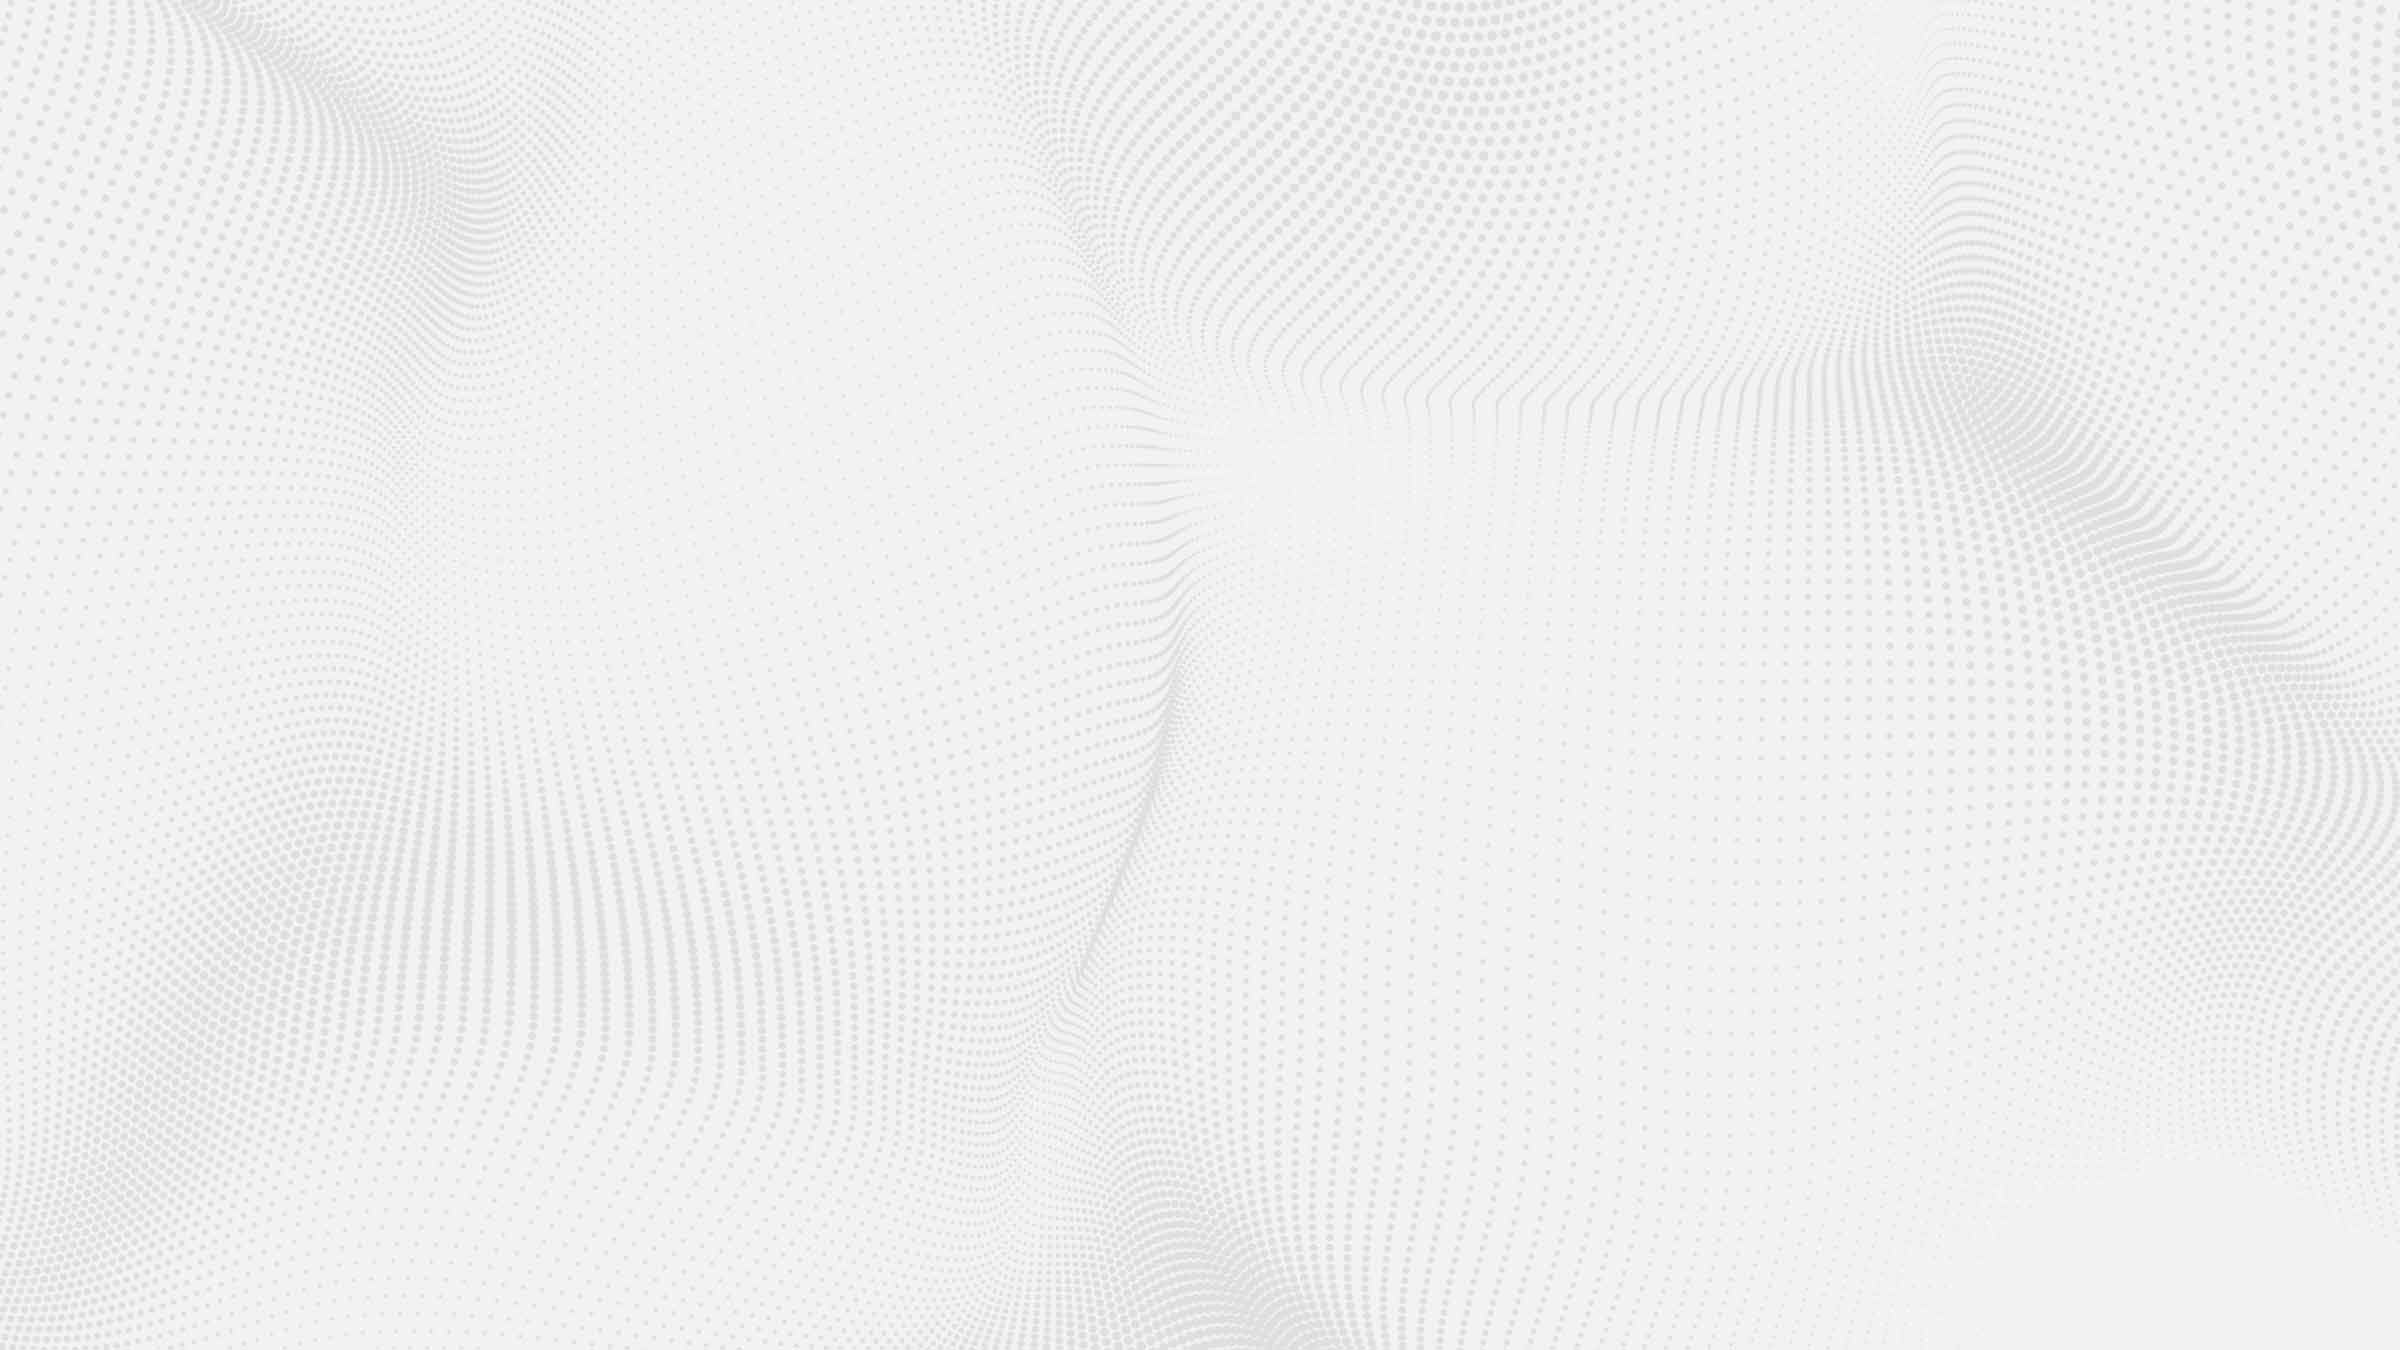 White pattern